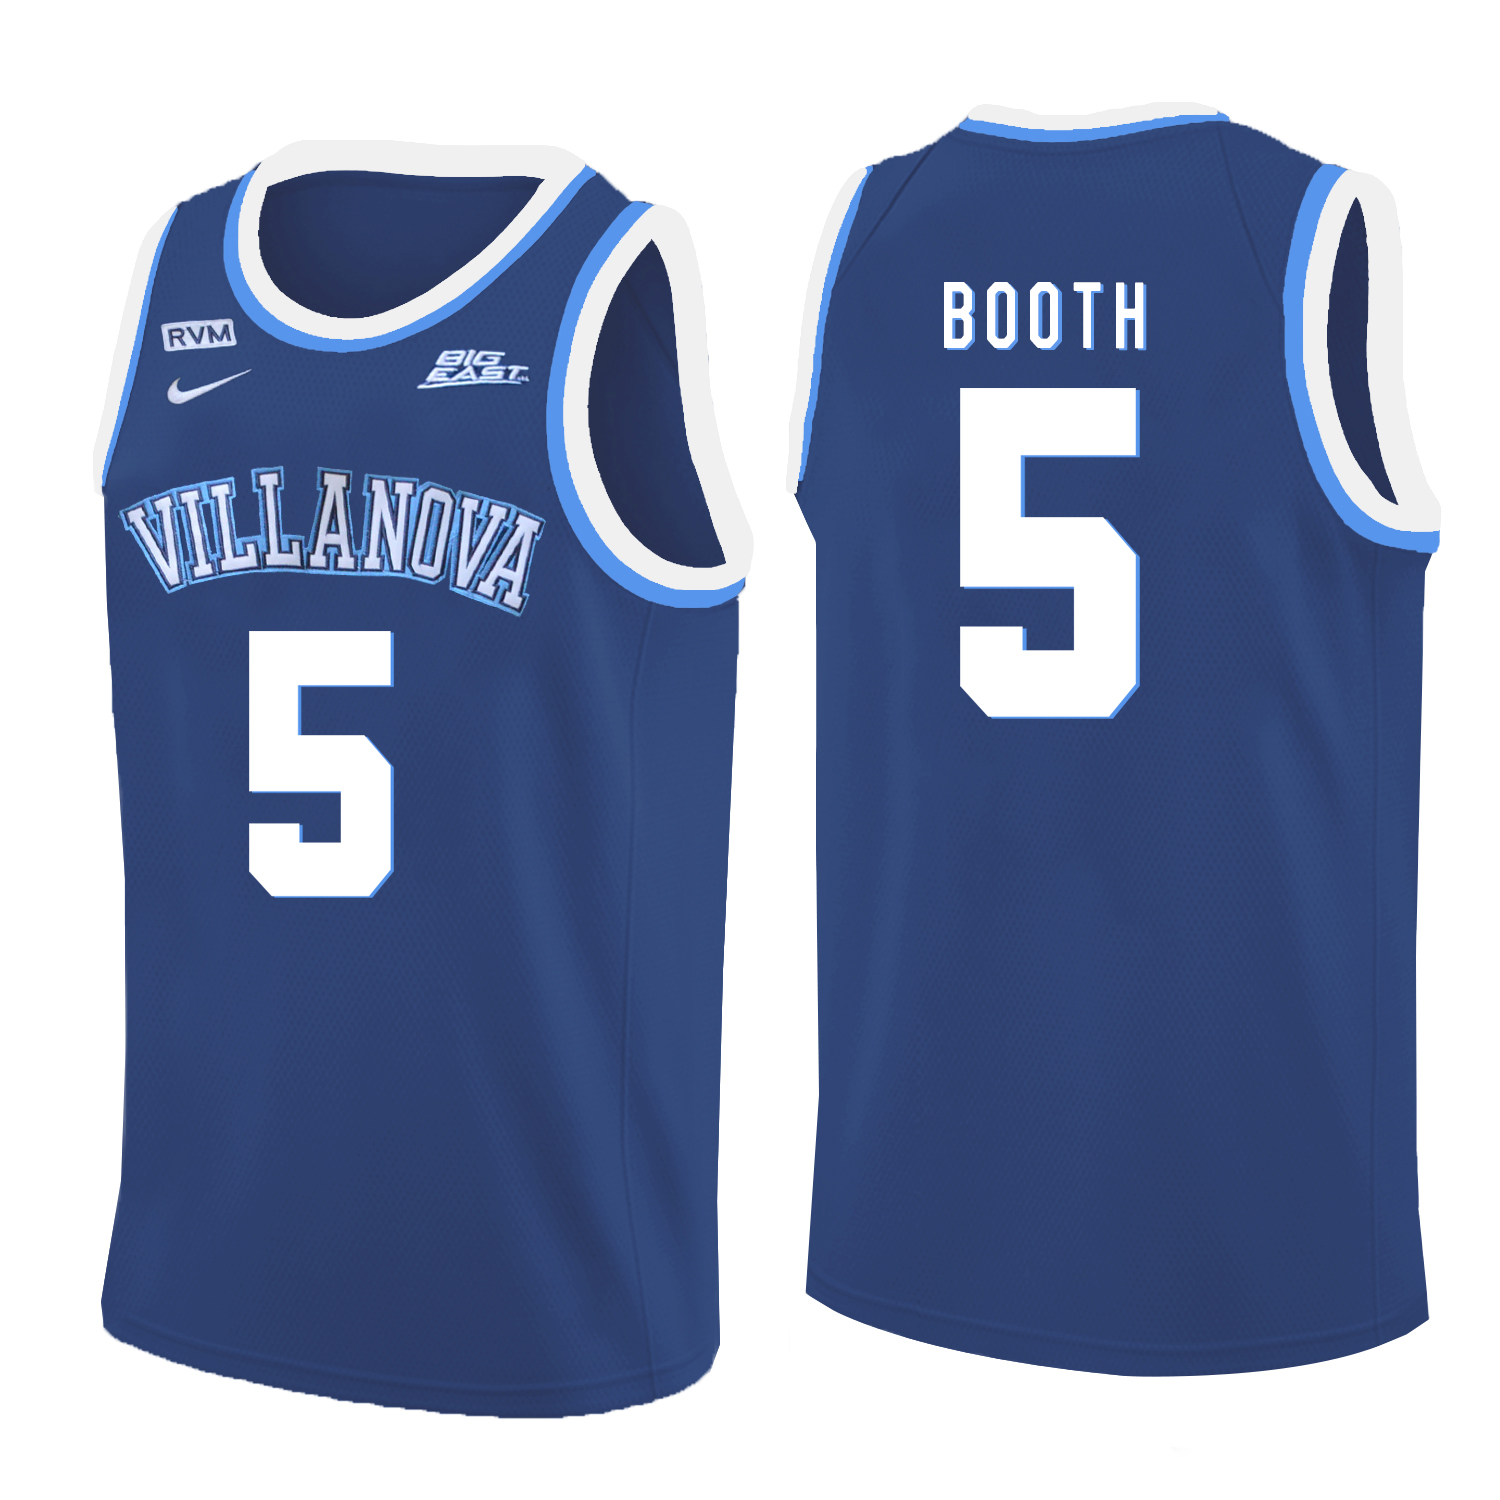 Villanova Wildcats 5 Phil Booth Blue College Basketball Jersey